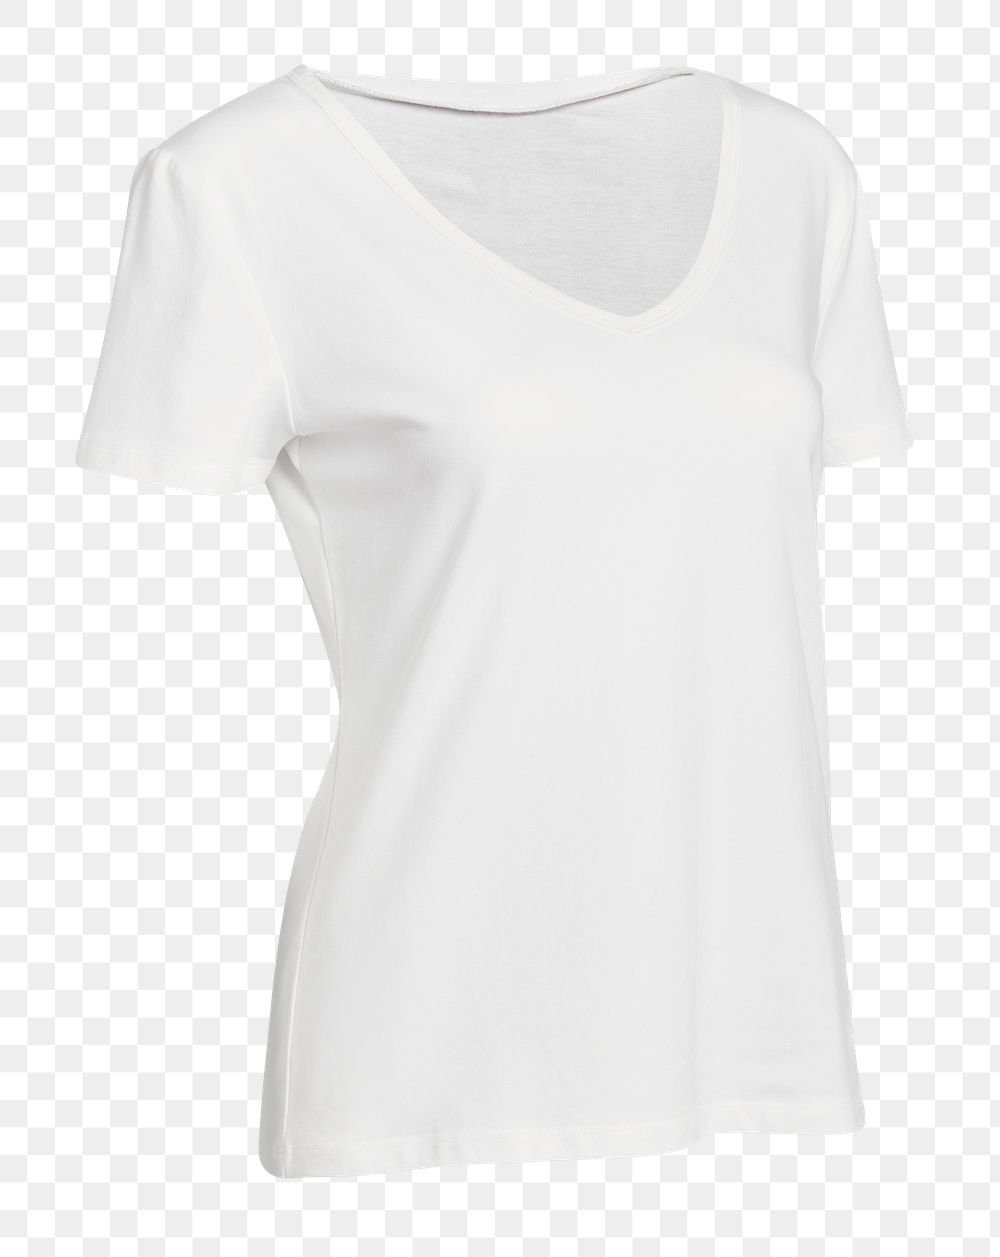 Women's white t-shirt png mockup